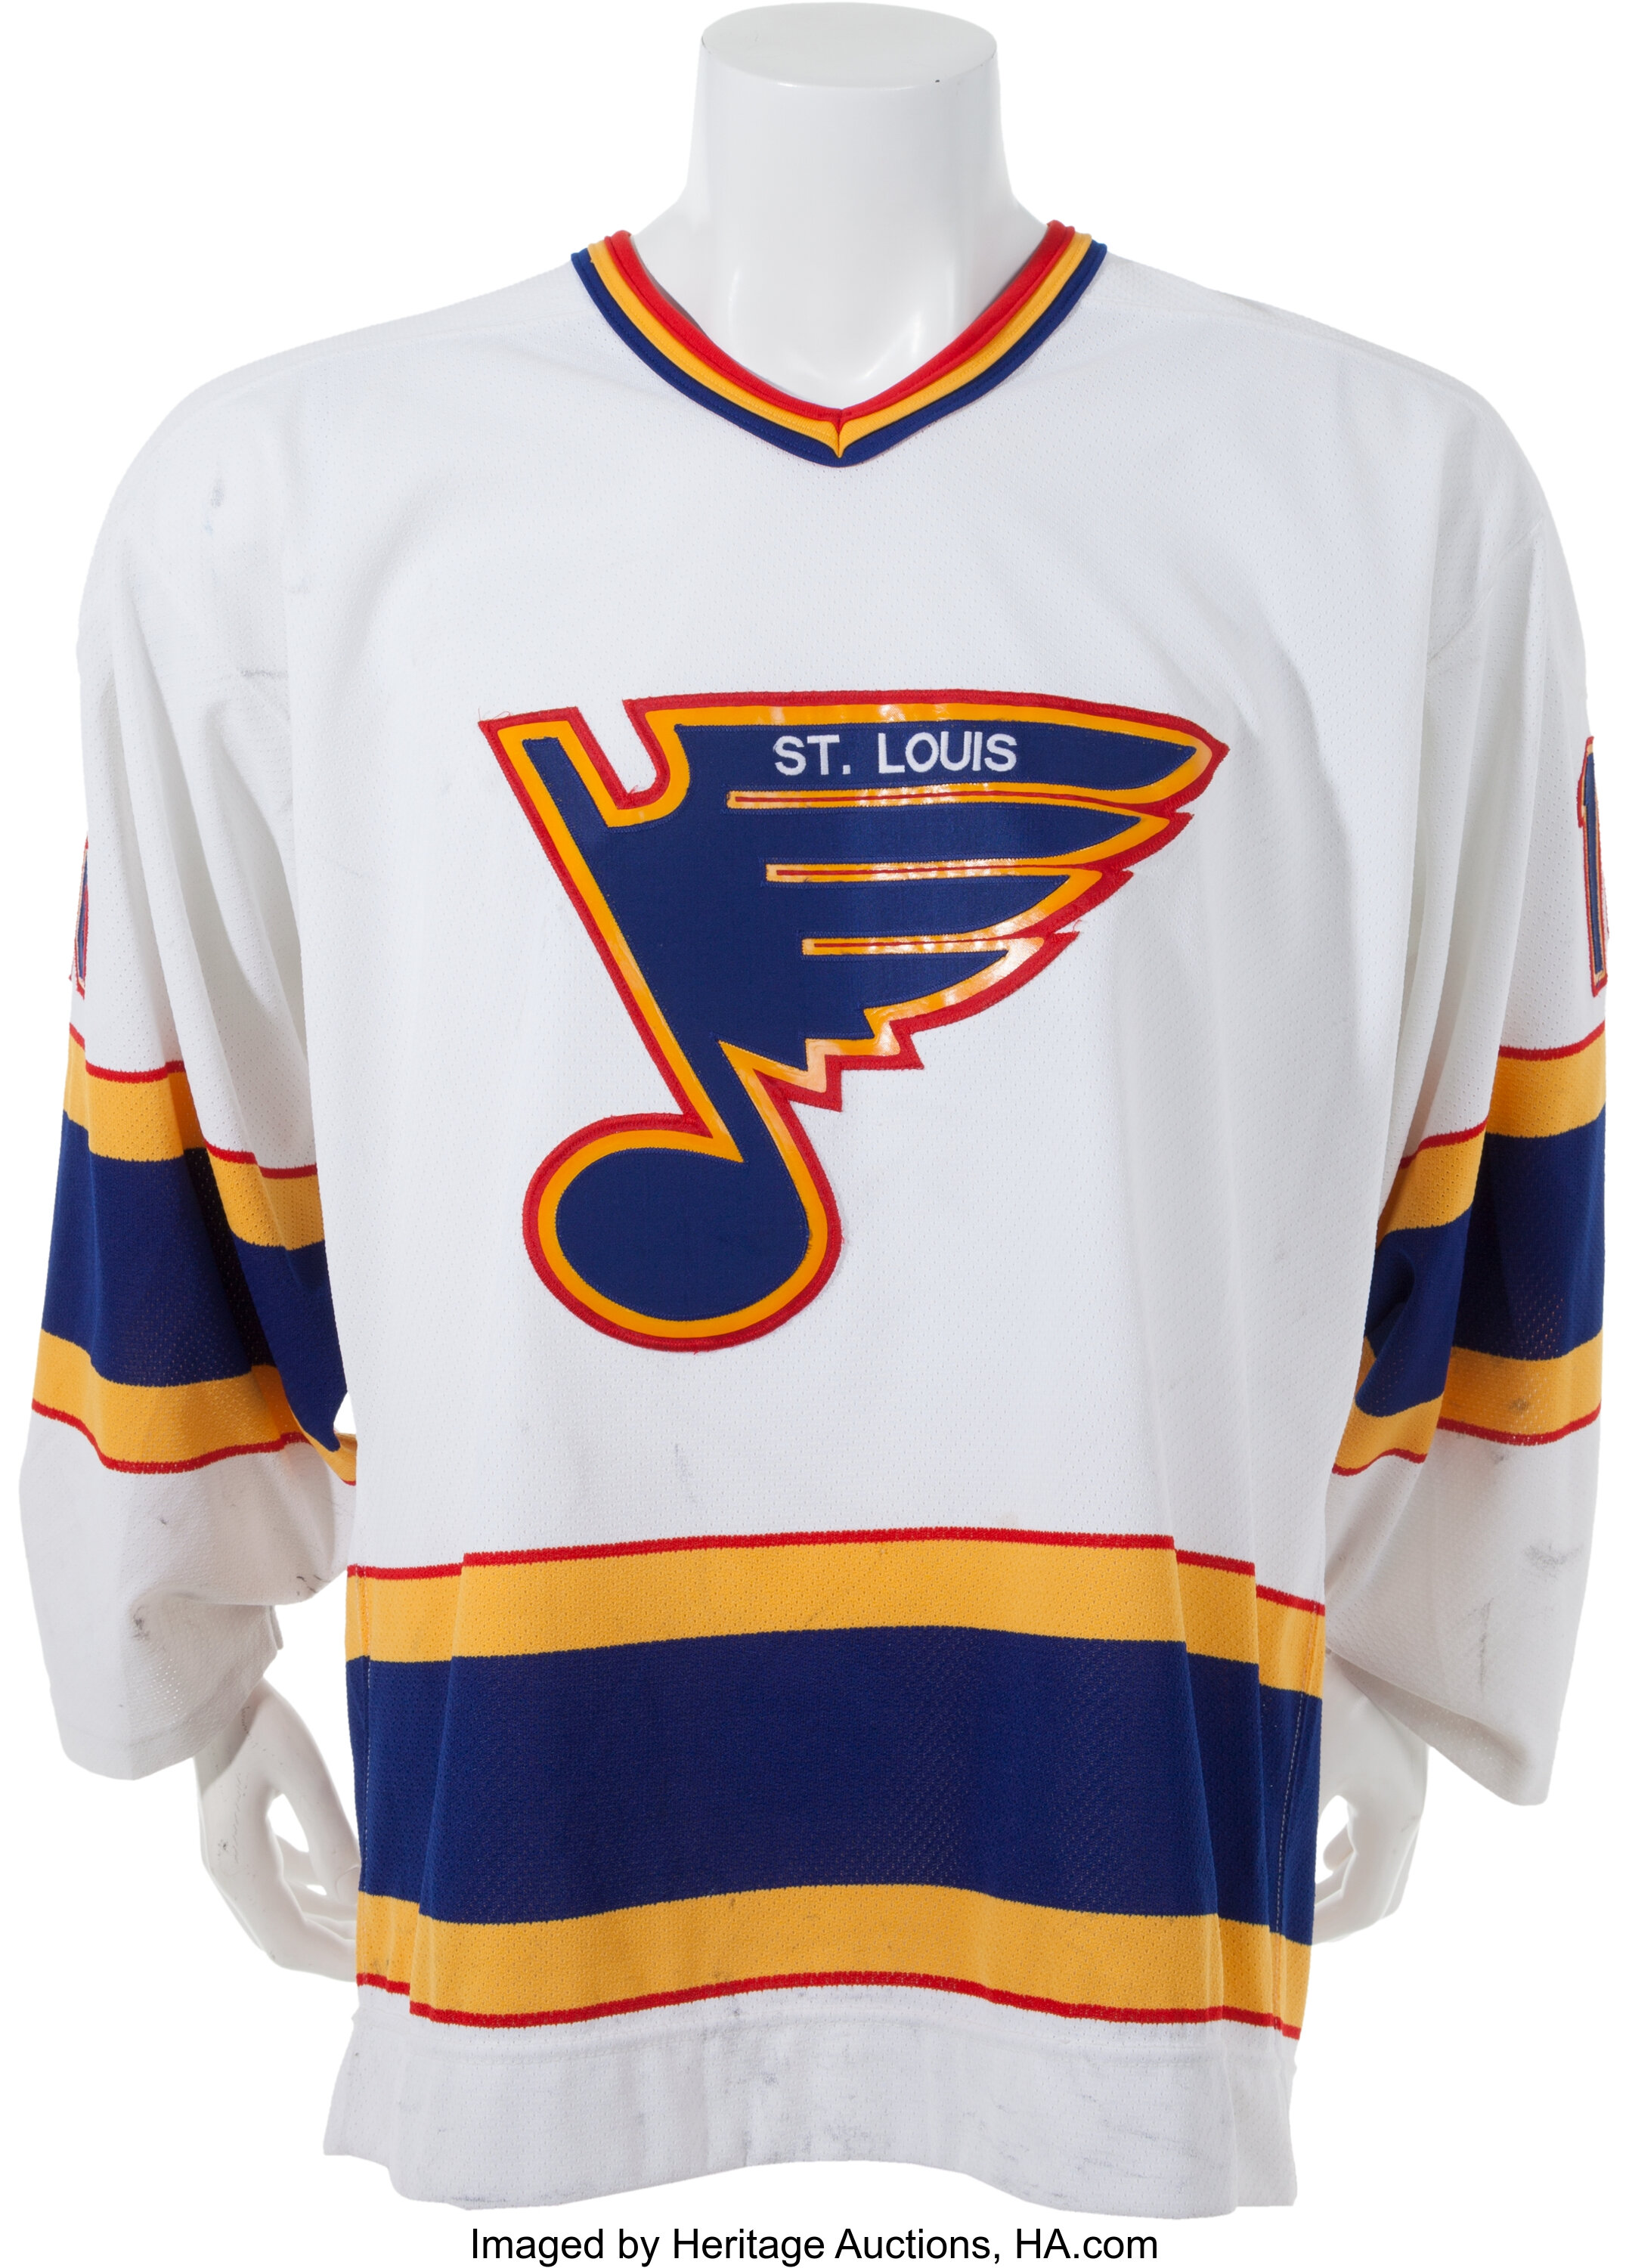 1988-89 Brett Hull Game Worn St. Louis Blues Jersey. Hockey